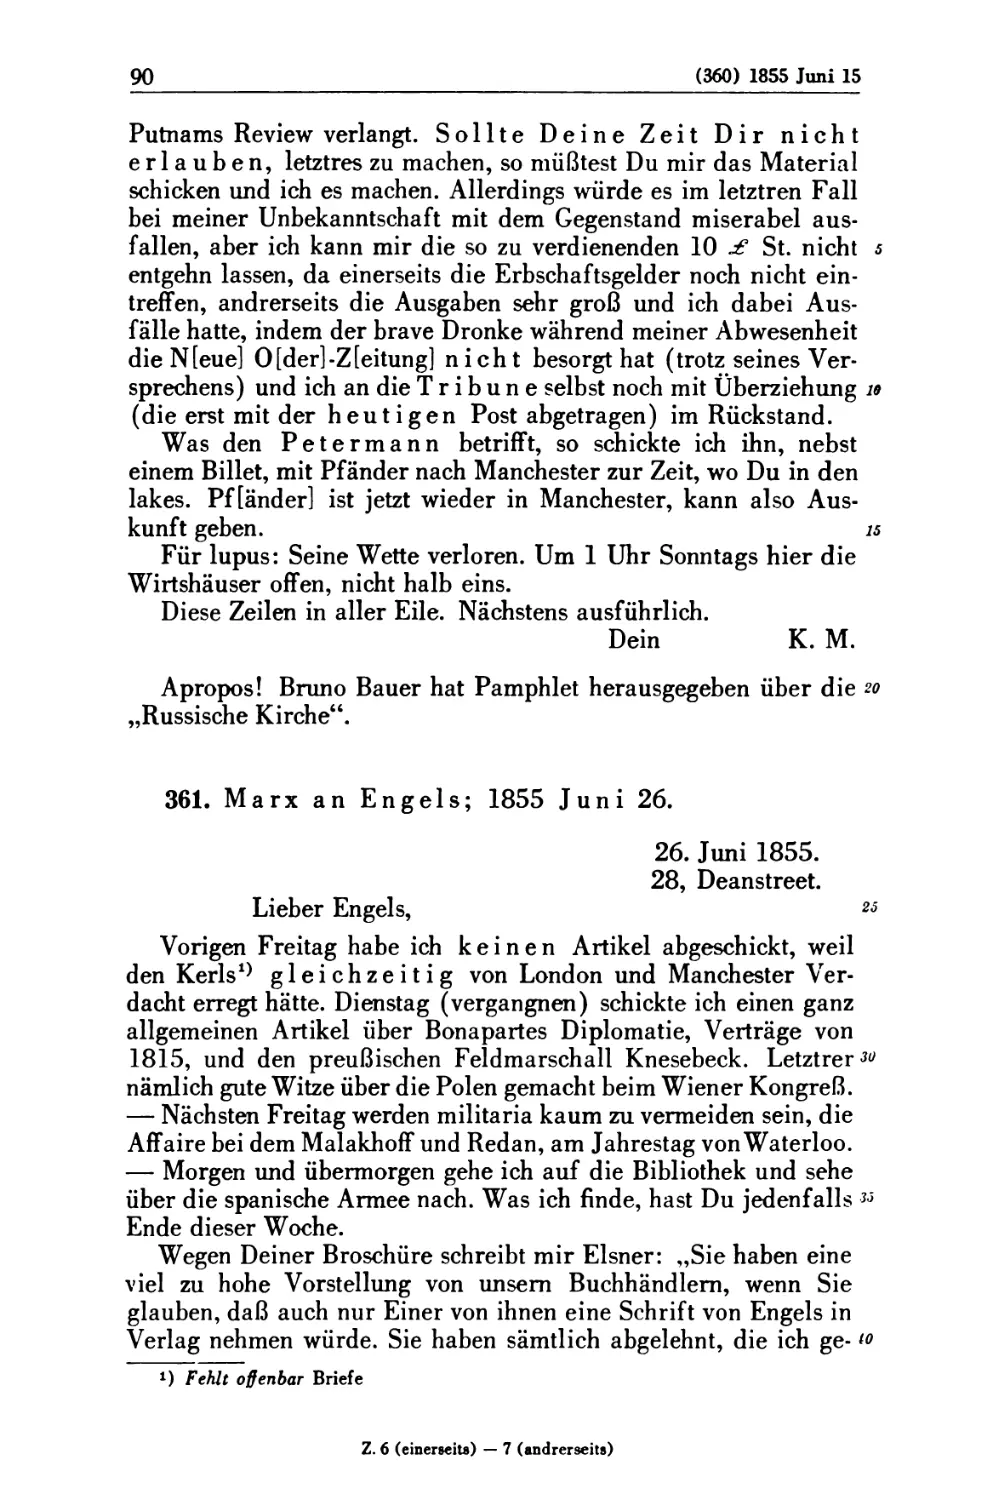 361. Marx an Engels; 1855 Juni 26